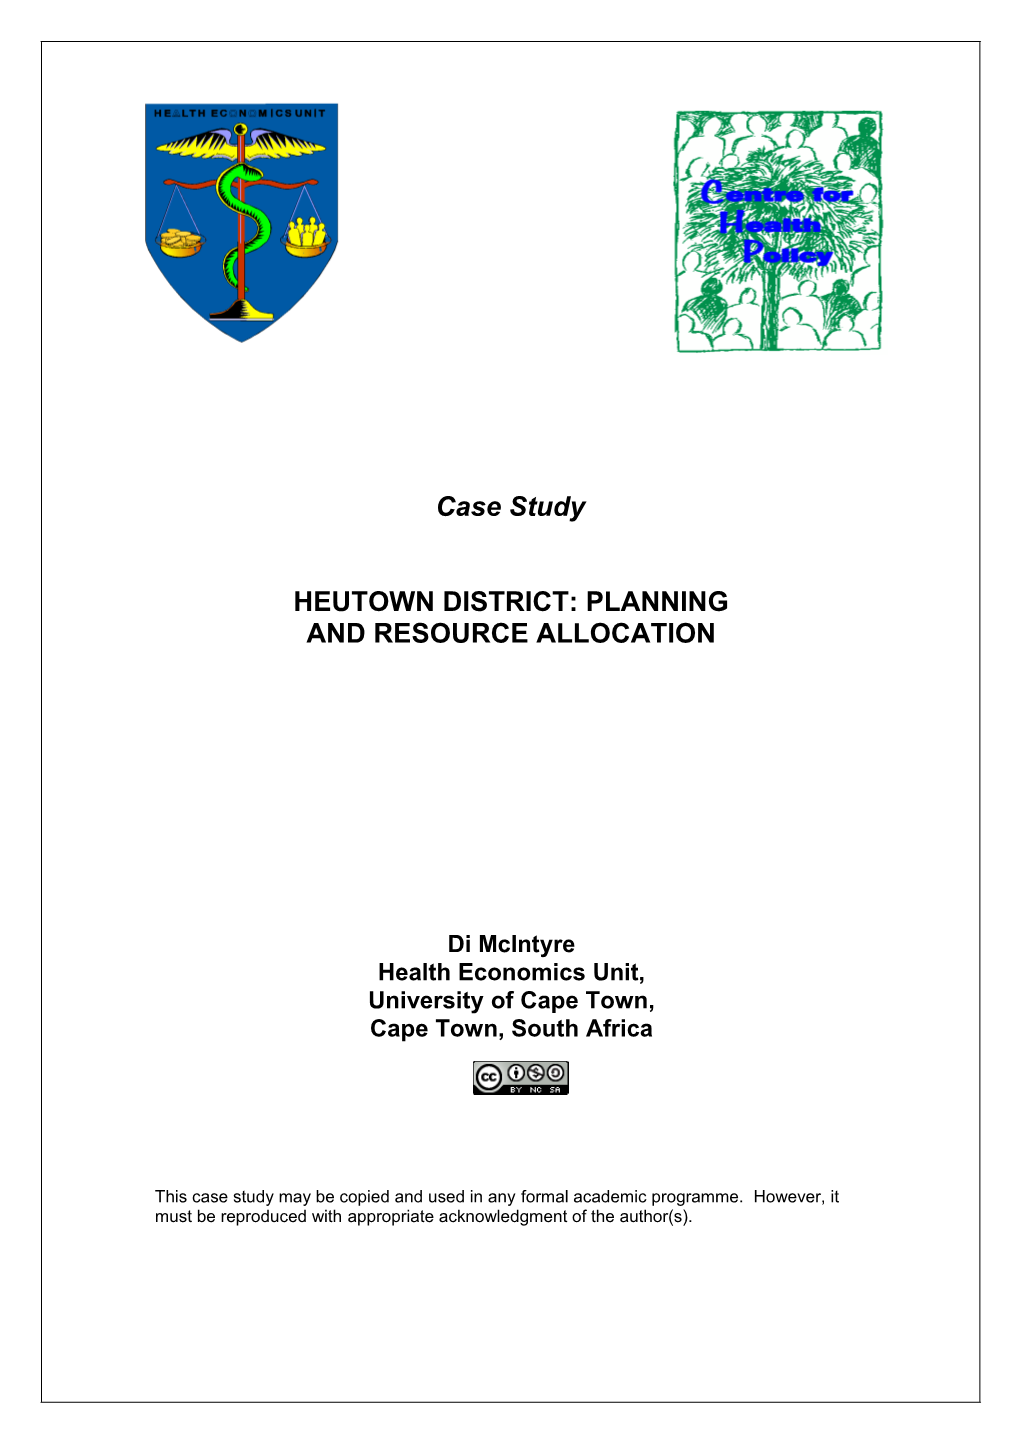 Heutown District Resource Allocation Case Study